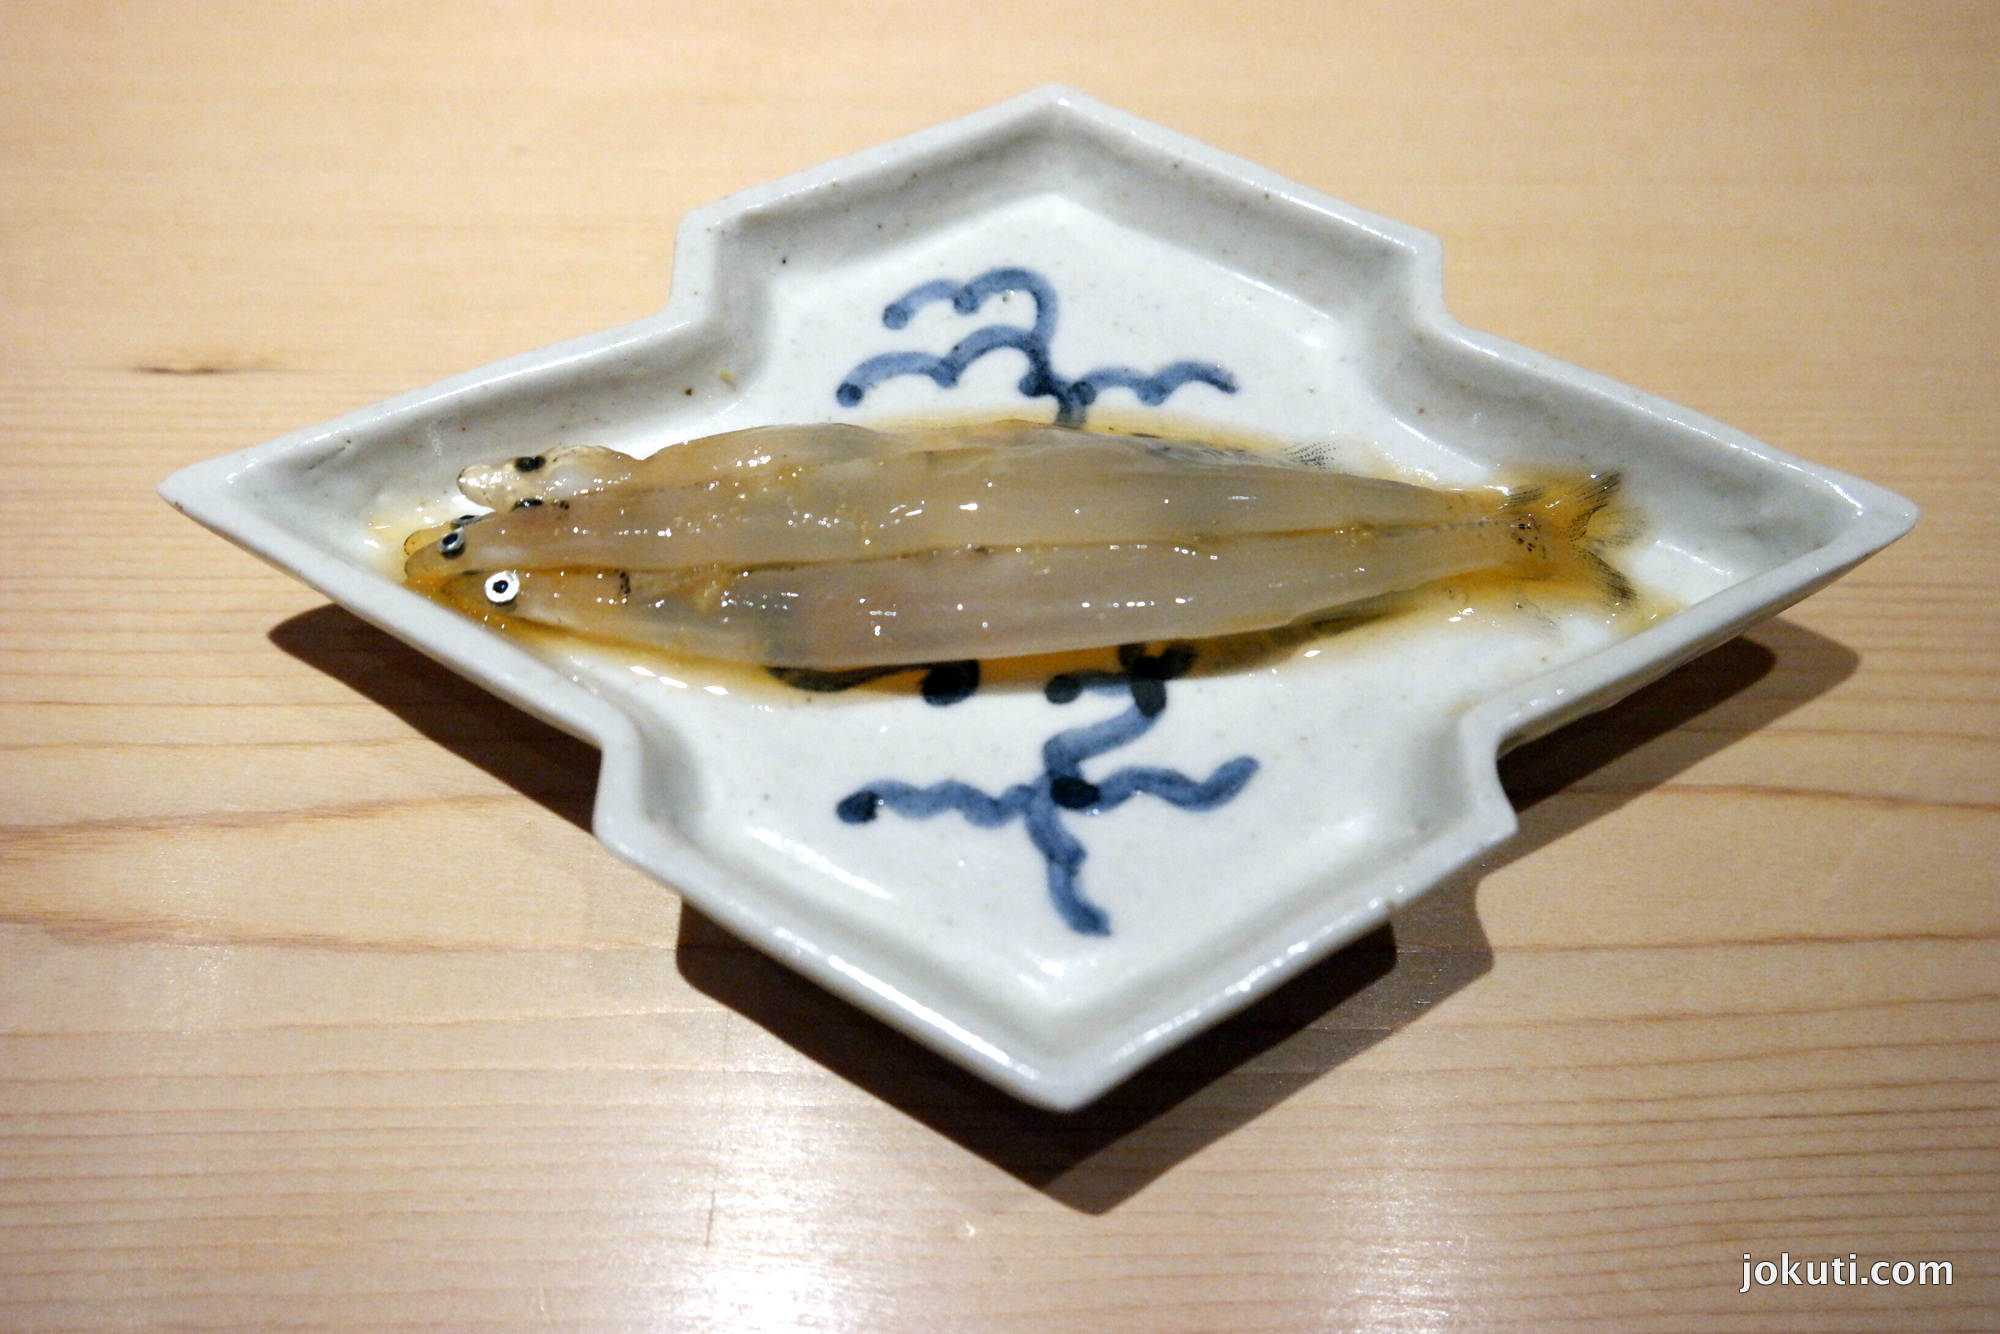 Shirauo (‘Japanese anchovies‘ or ice fish).